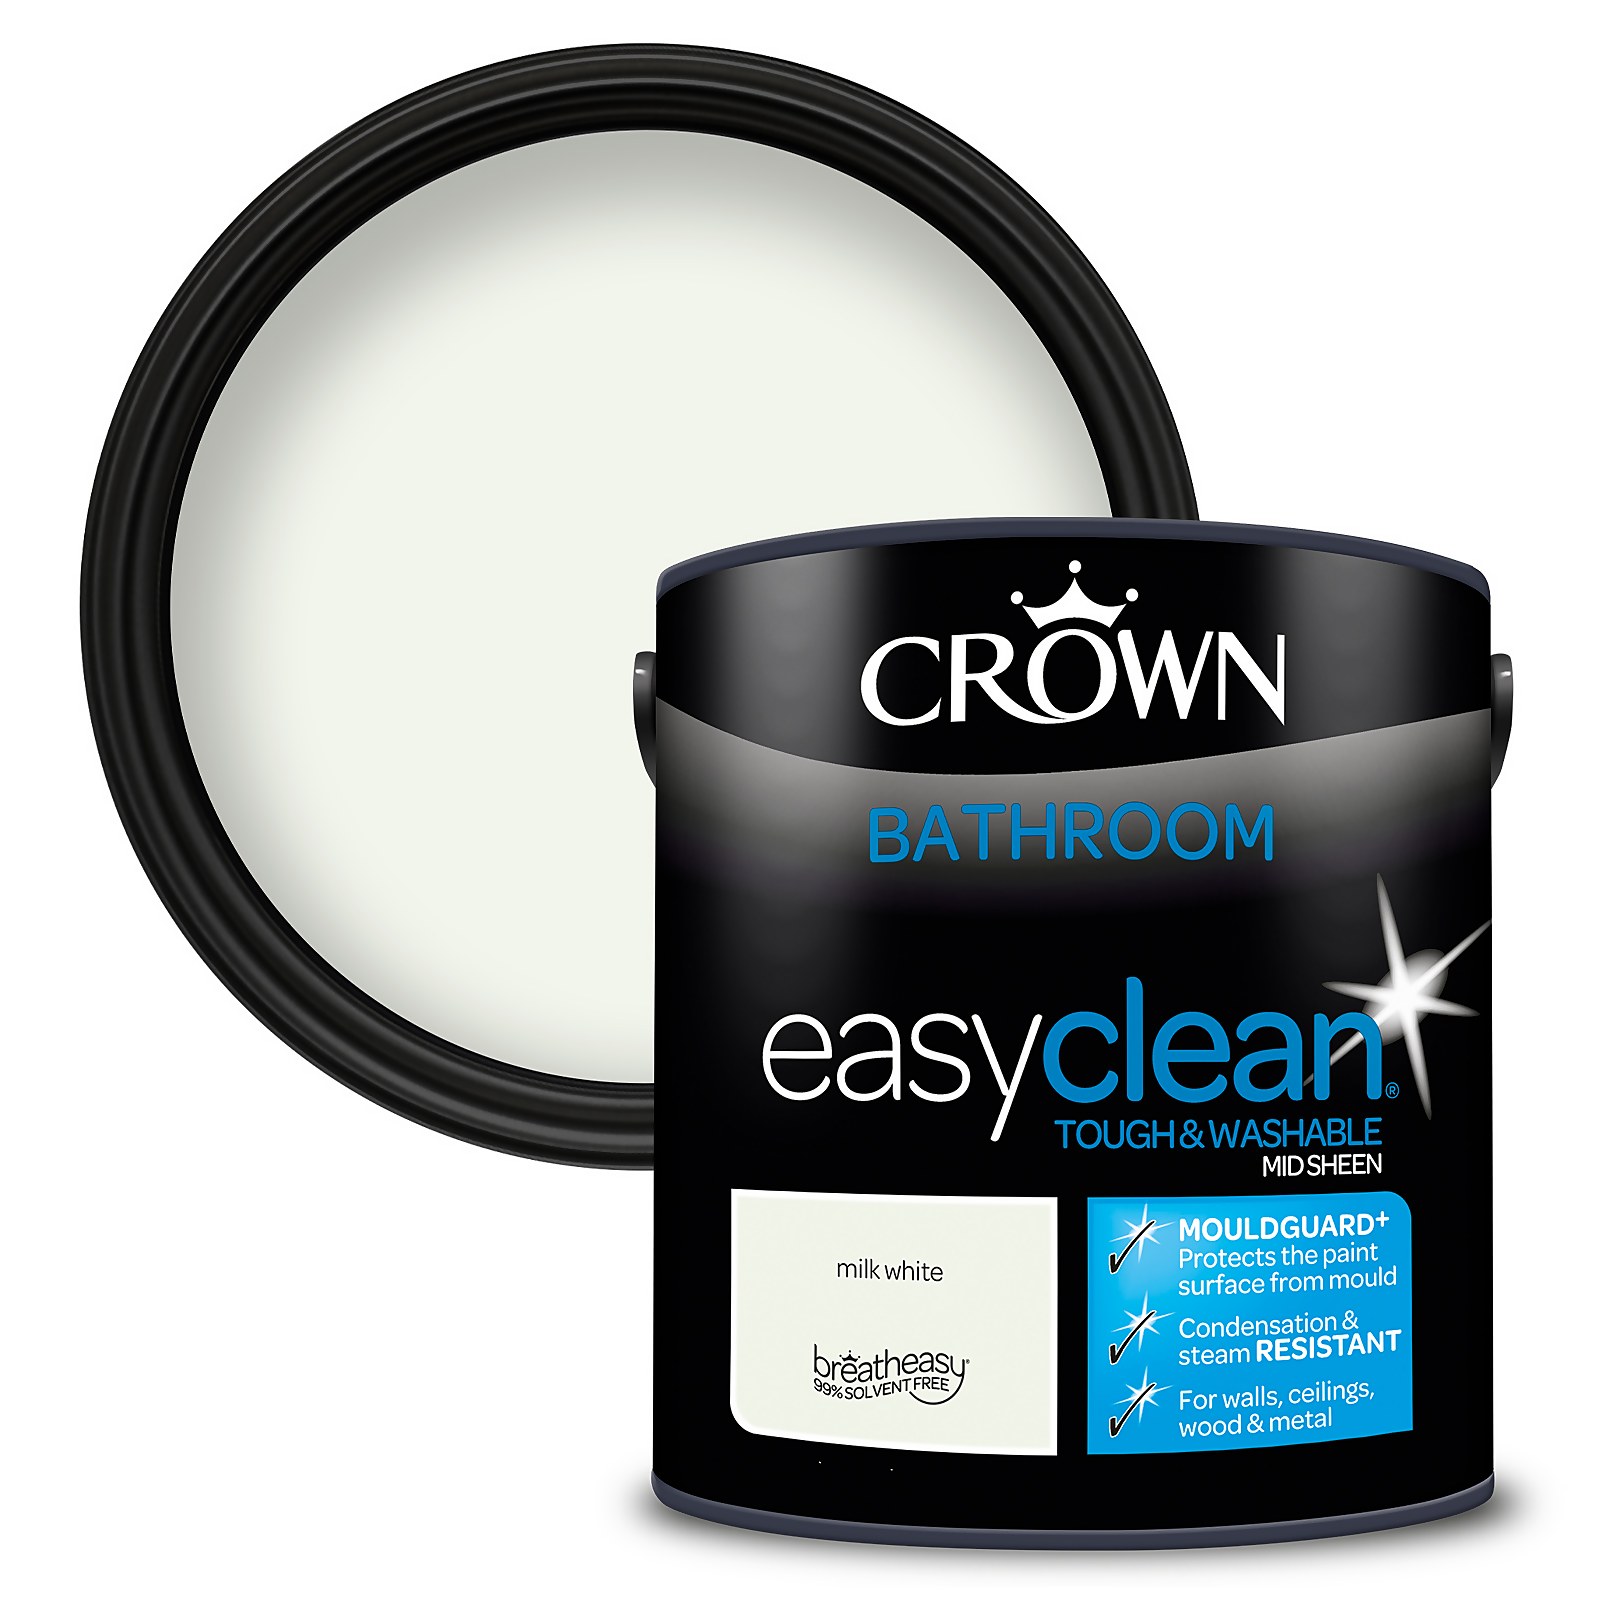 Crown Easyclean Bathroom Mouldguard+ Mid Sheen Paint Milk White - 2.5L